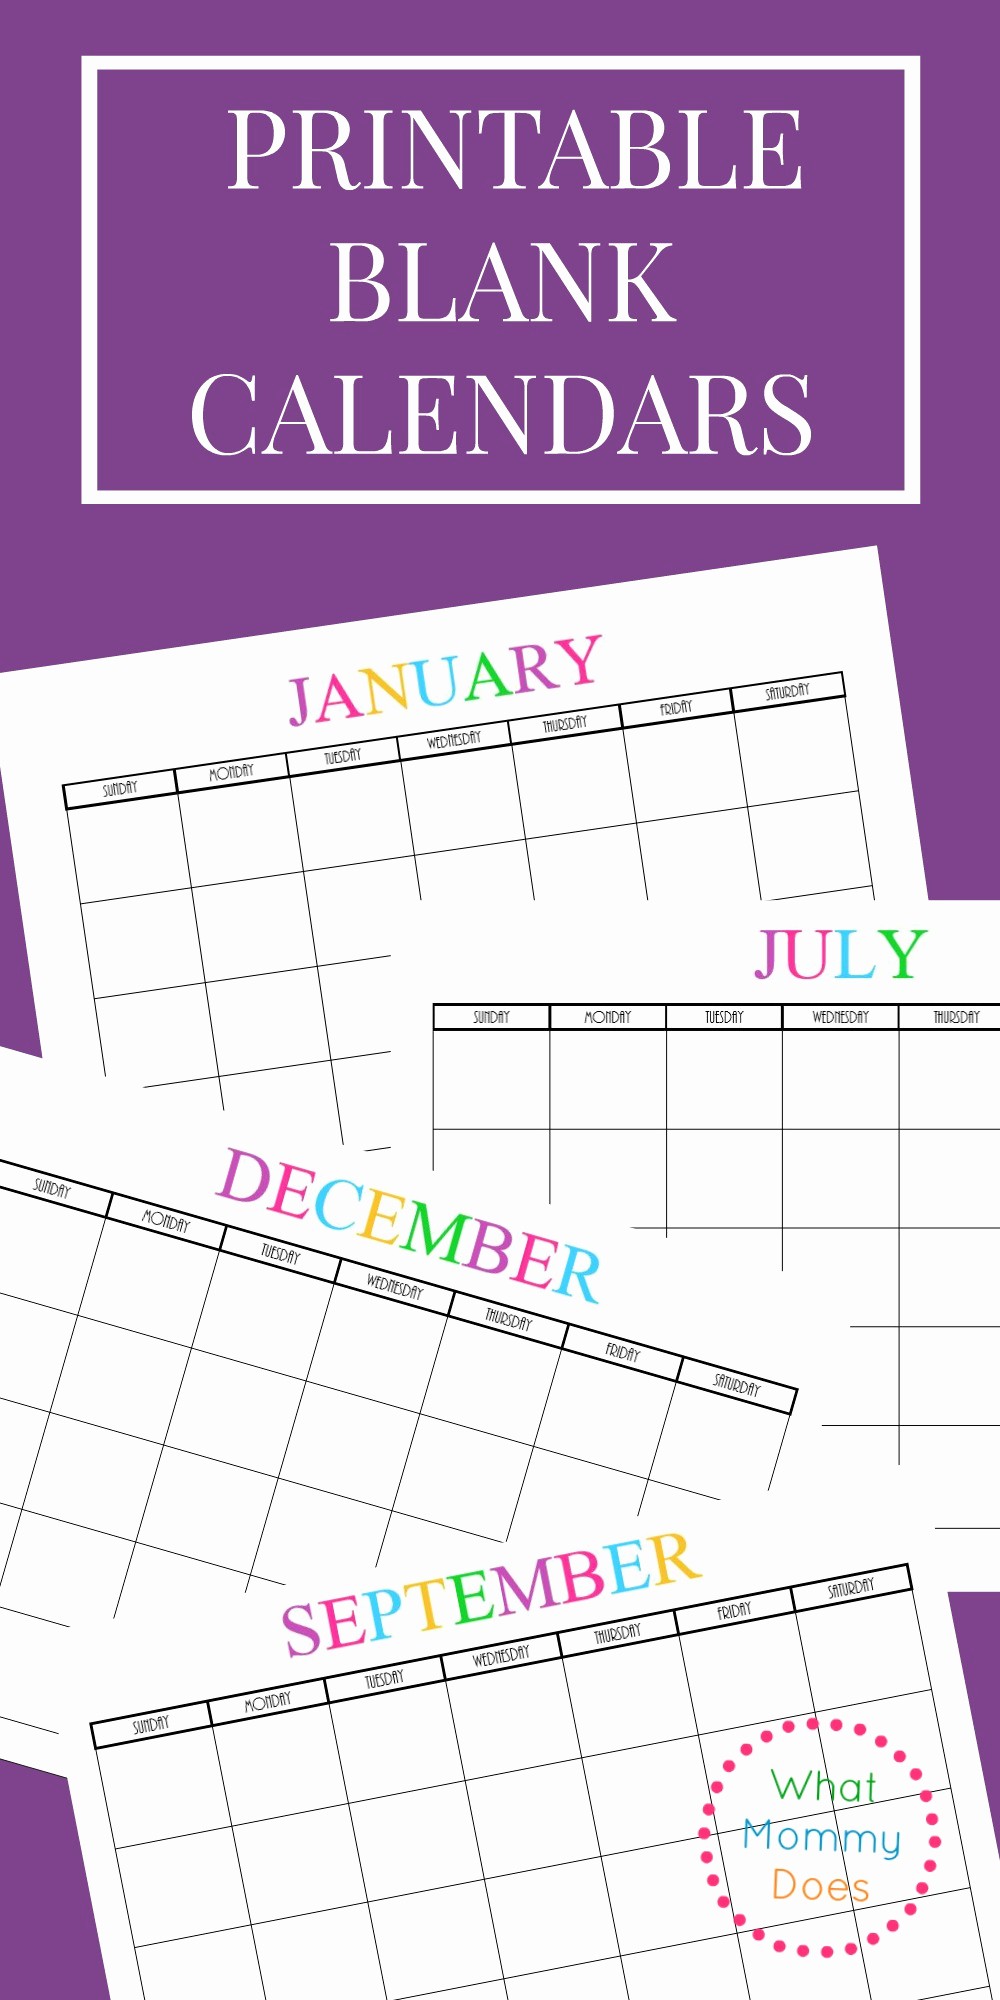 Editable Calendar 2017-2018 Lovely Free Printable Blank Monthly Calendars 2017 2018 2019